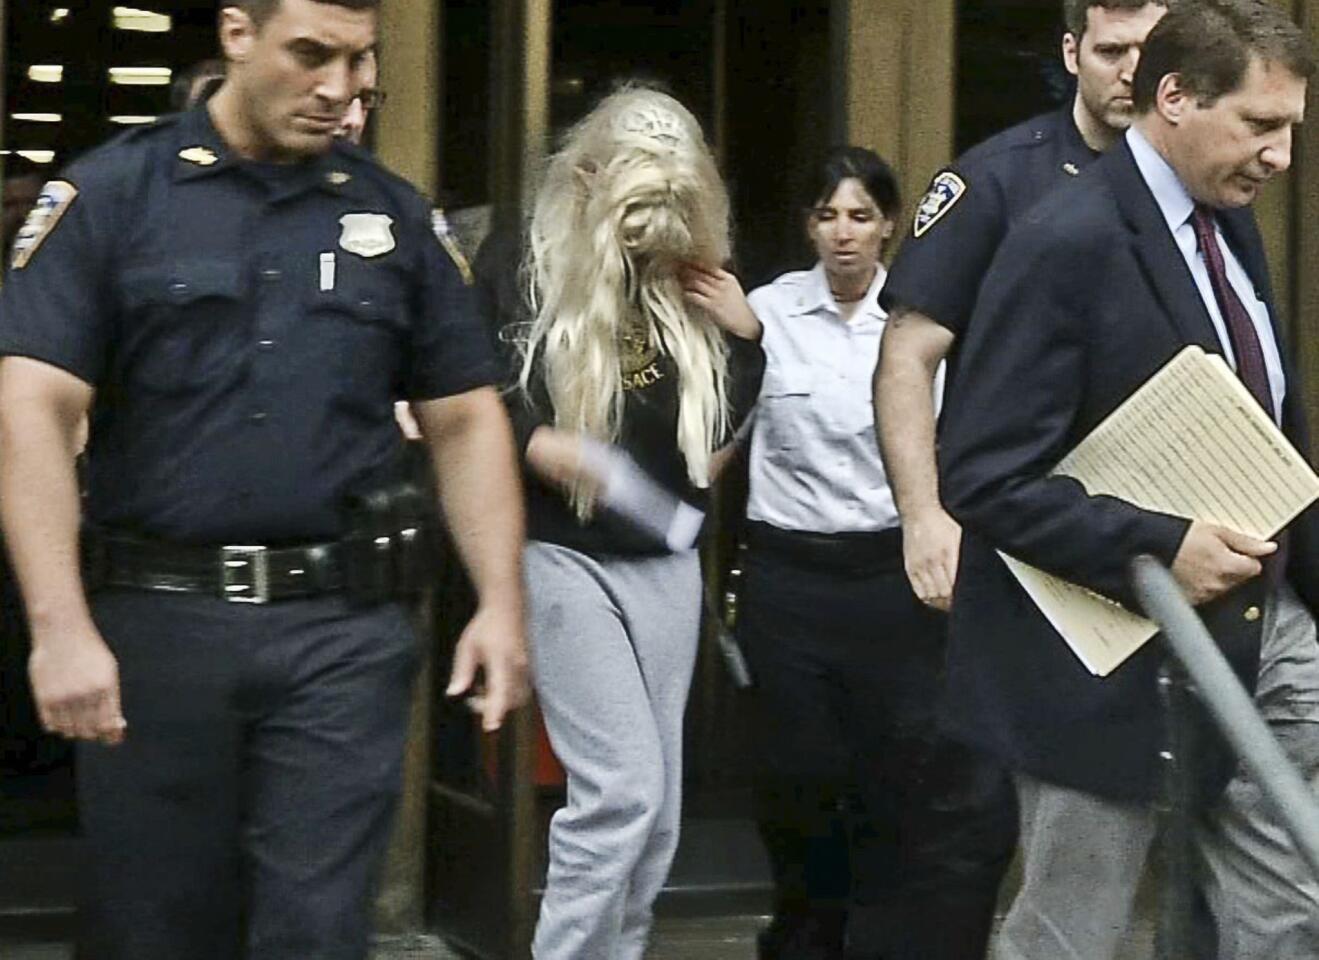 Amanda Bynes arrested in New York